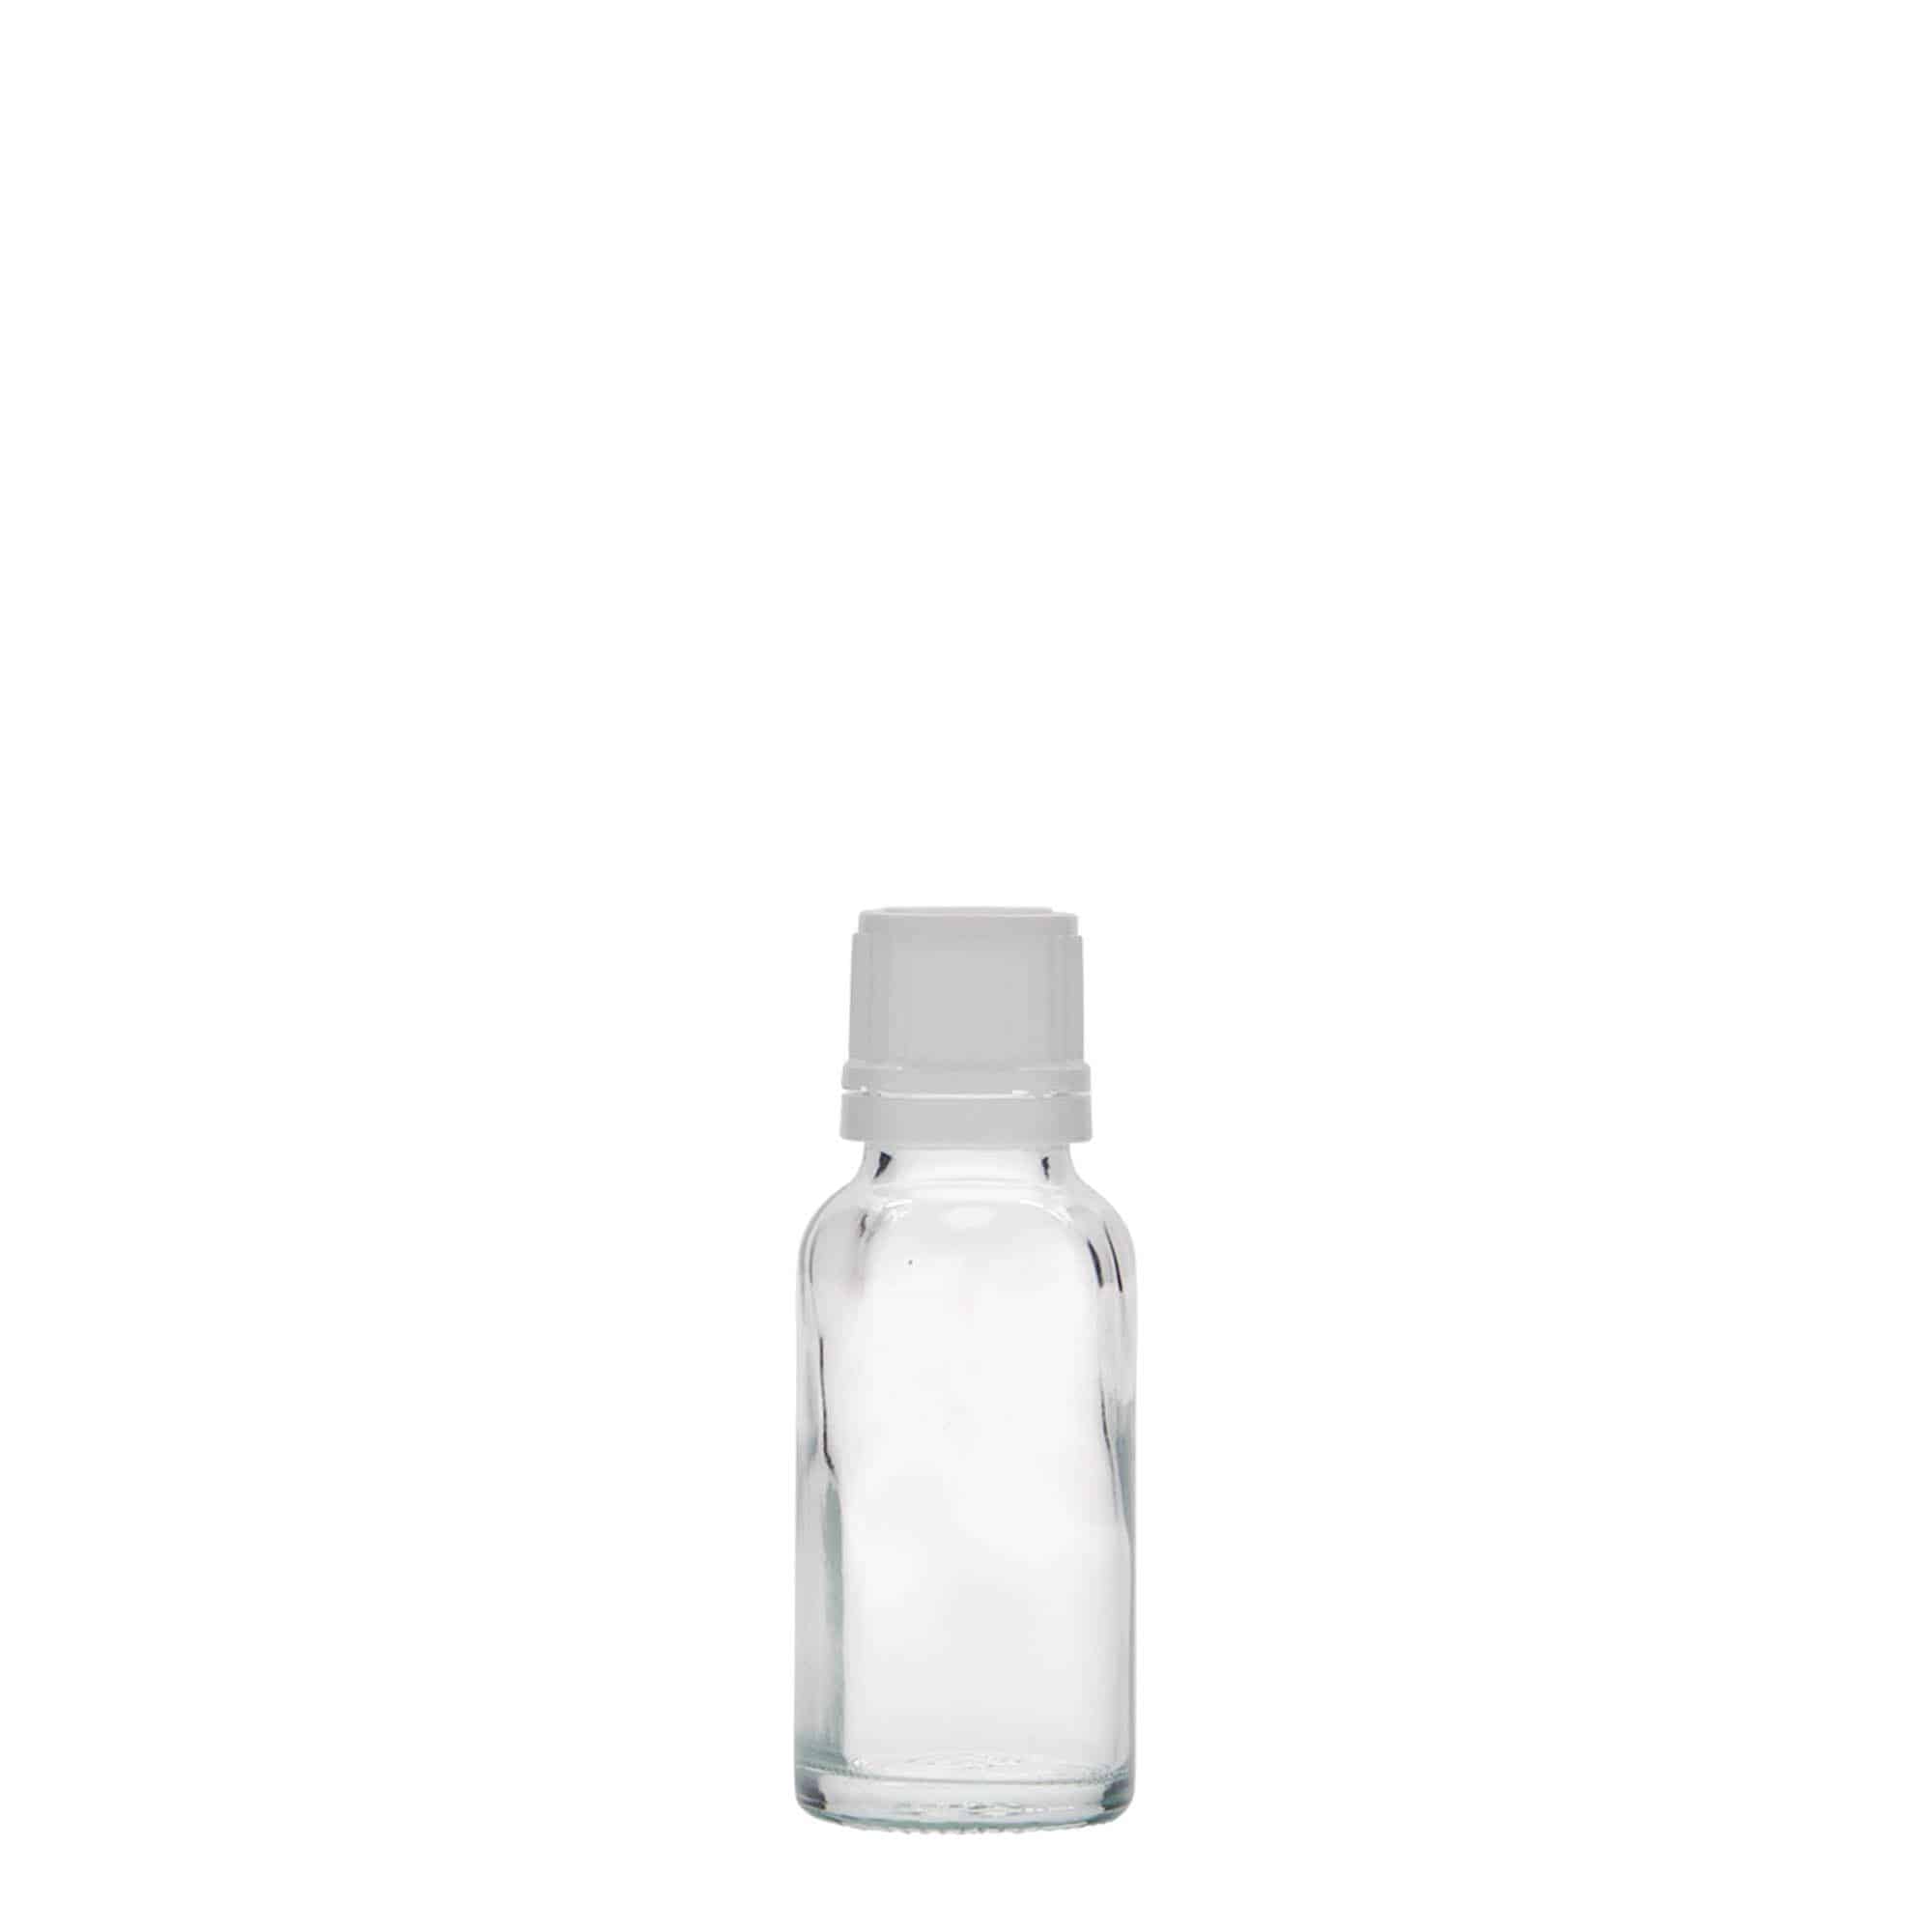 20 ml medicine bottle, glass, closure: DIN 18